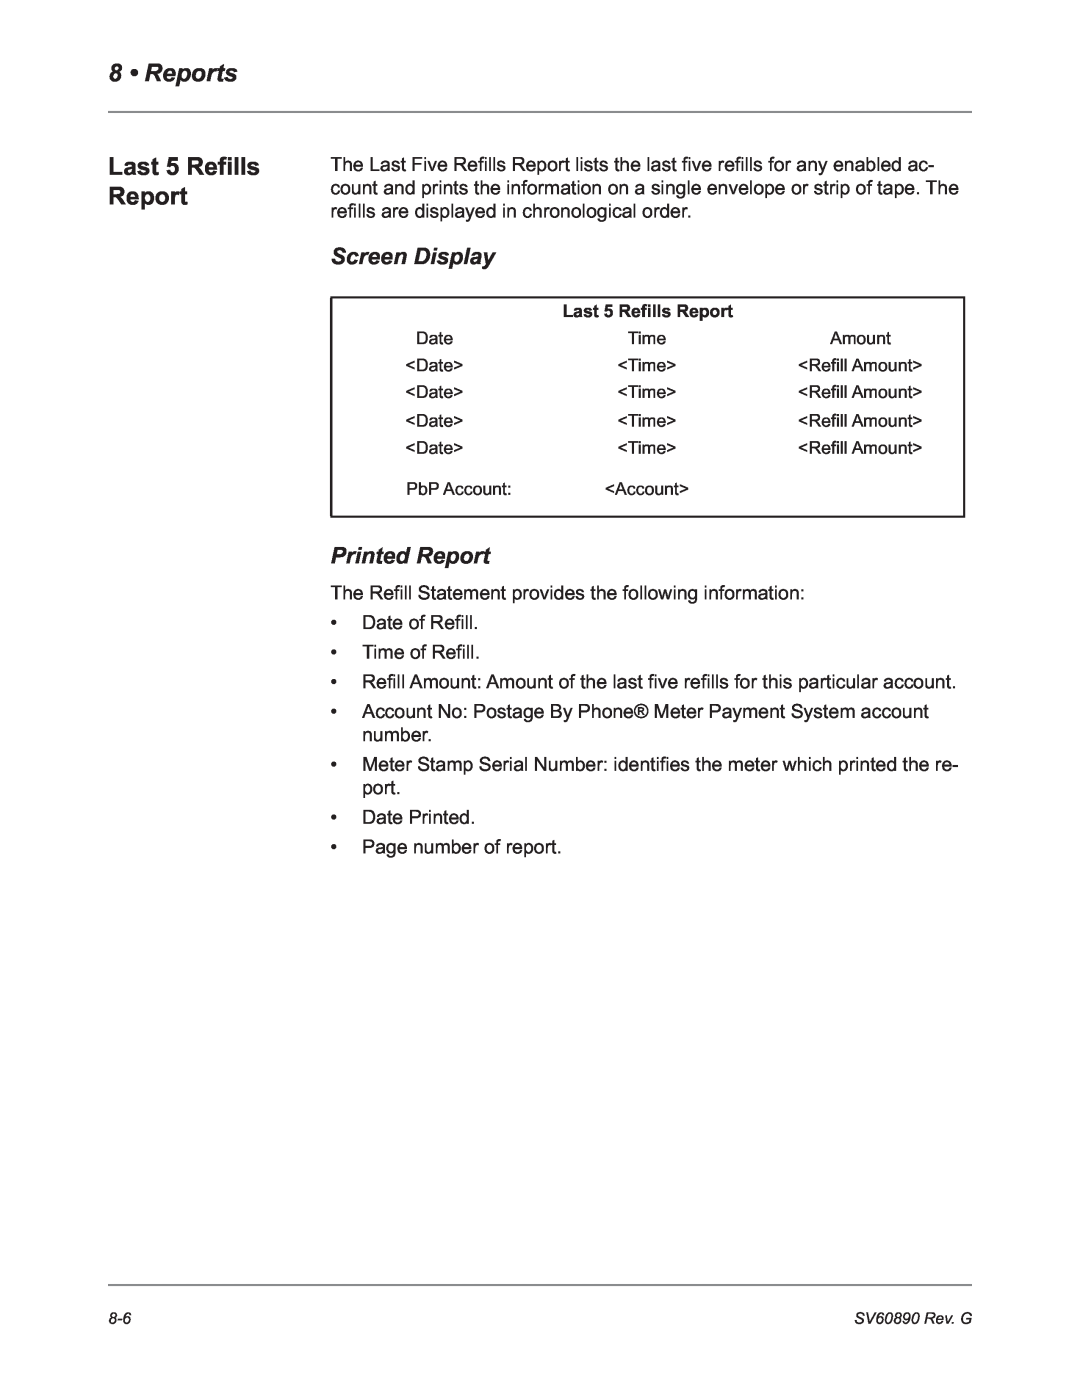 Pitney Bowes DM550, DM500 manual Last 5 Refills Report, Reports, Screen Display, Printed Report 